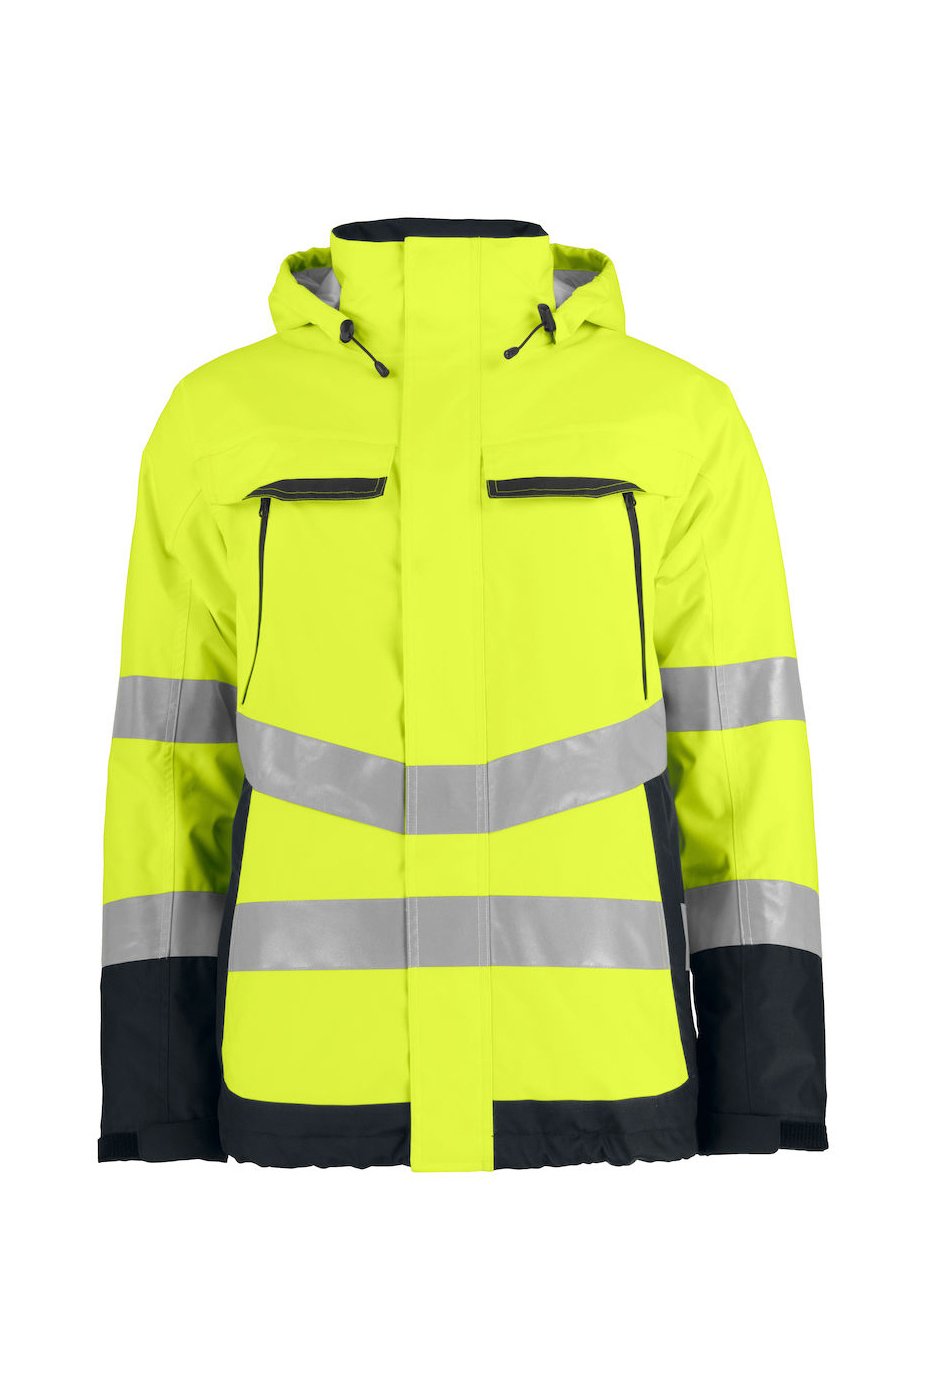 Warnschutz Arbeitshose EN 20471 1, Workwear Klasse Müller ISO - gelb/schwarz